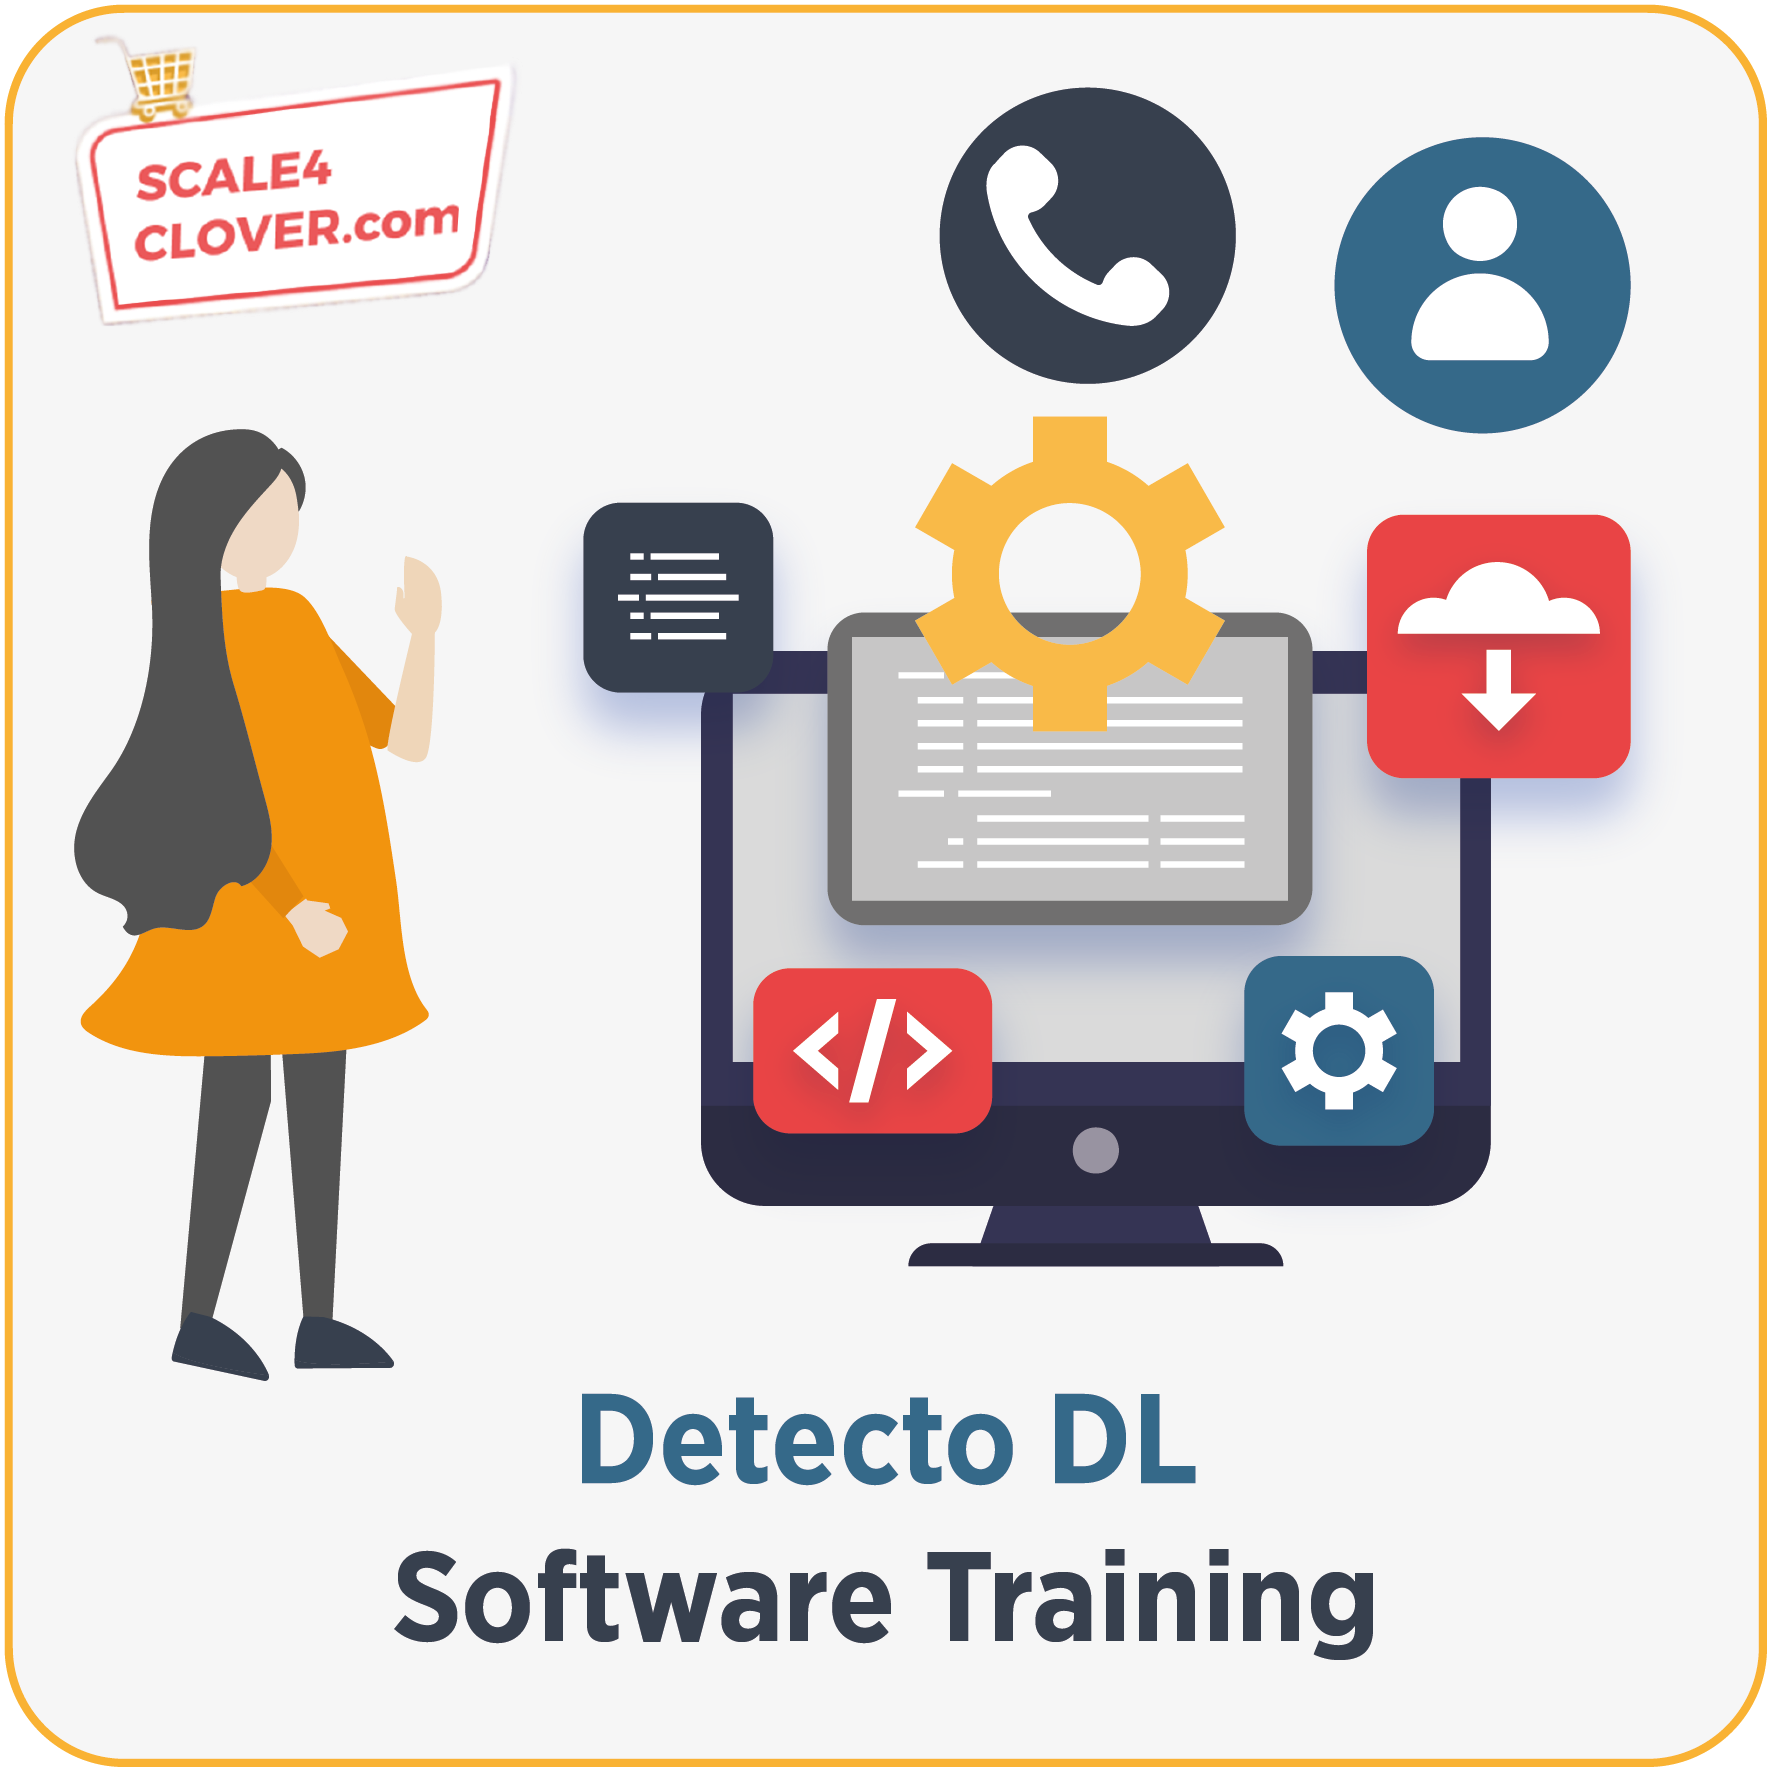 DLX50 Software Utility Program Instal and Train